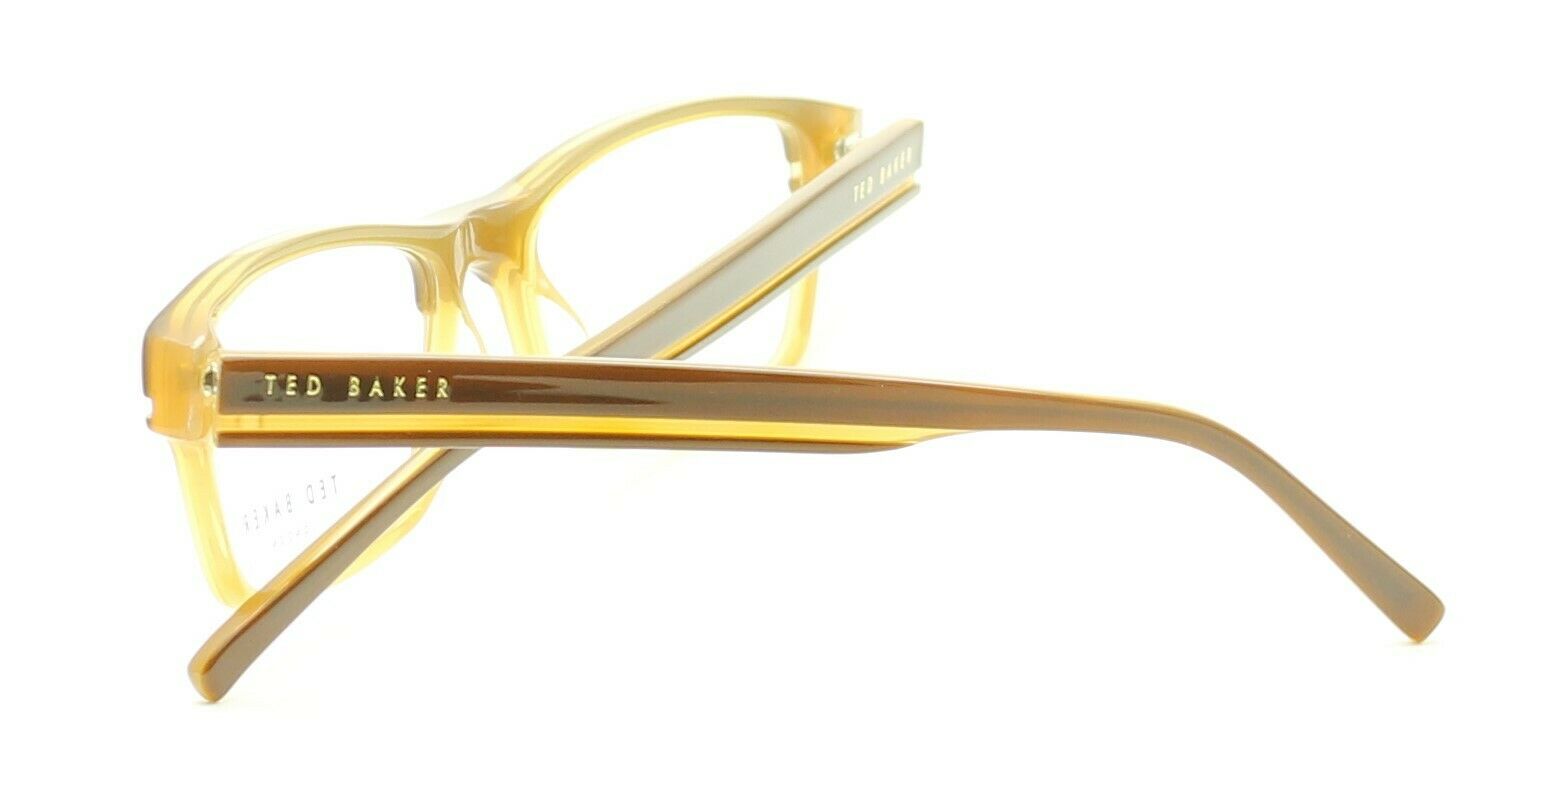 TED BAKER Glover 8080 148 53mm Eyewear FRAMES Glasses Eyeglasses RX Optical -New